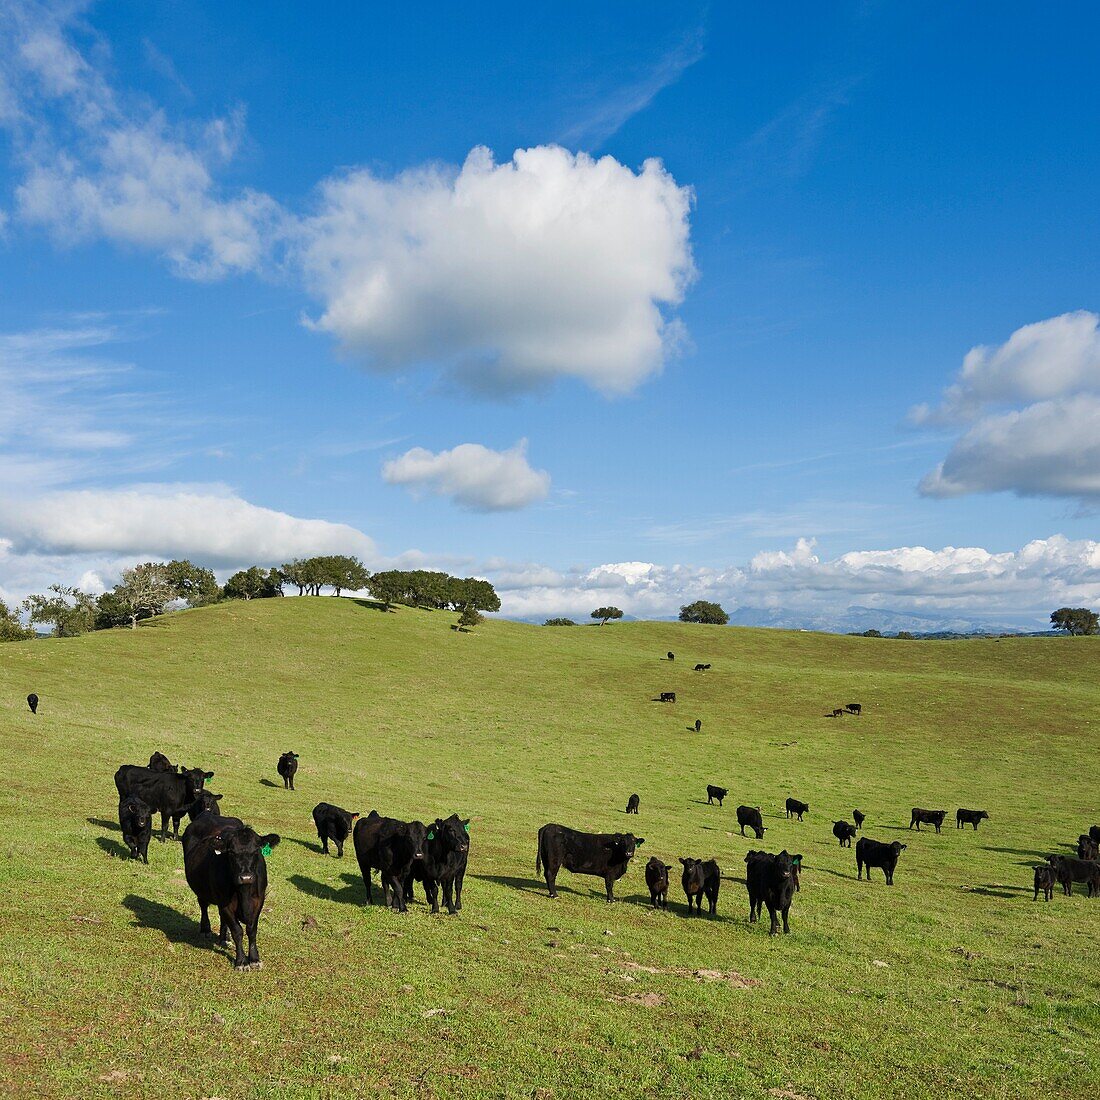 Herd of Black Angus cows and calves in green pasture, Santa Barbara country, California